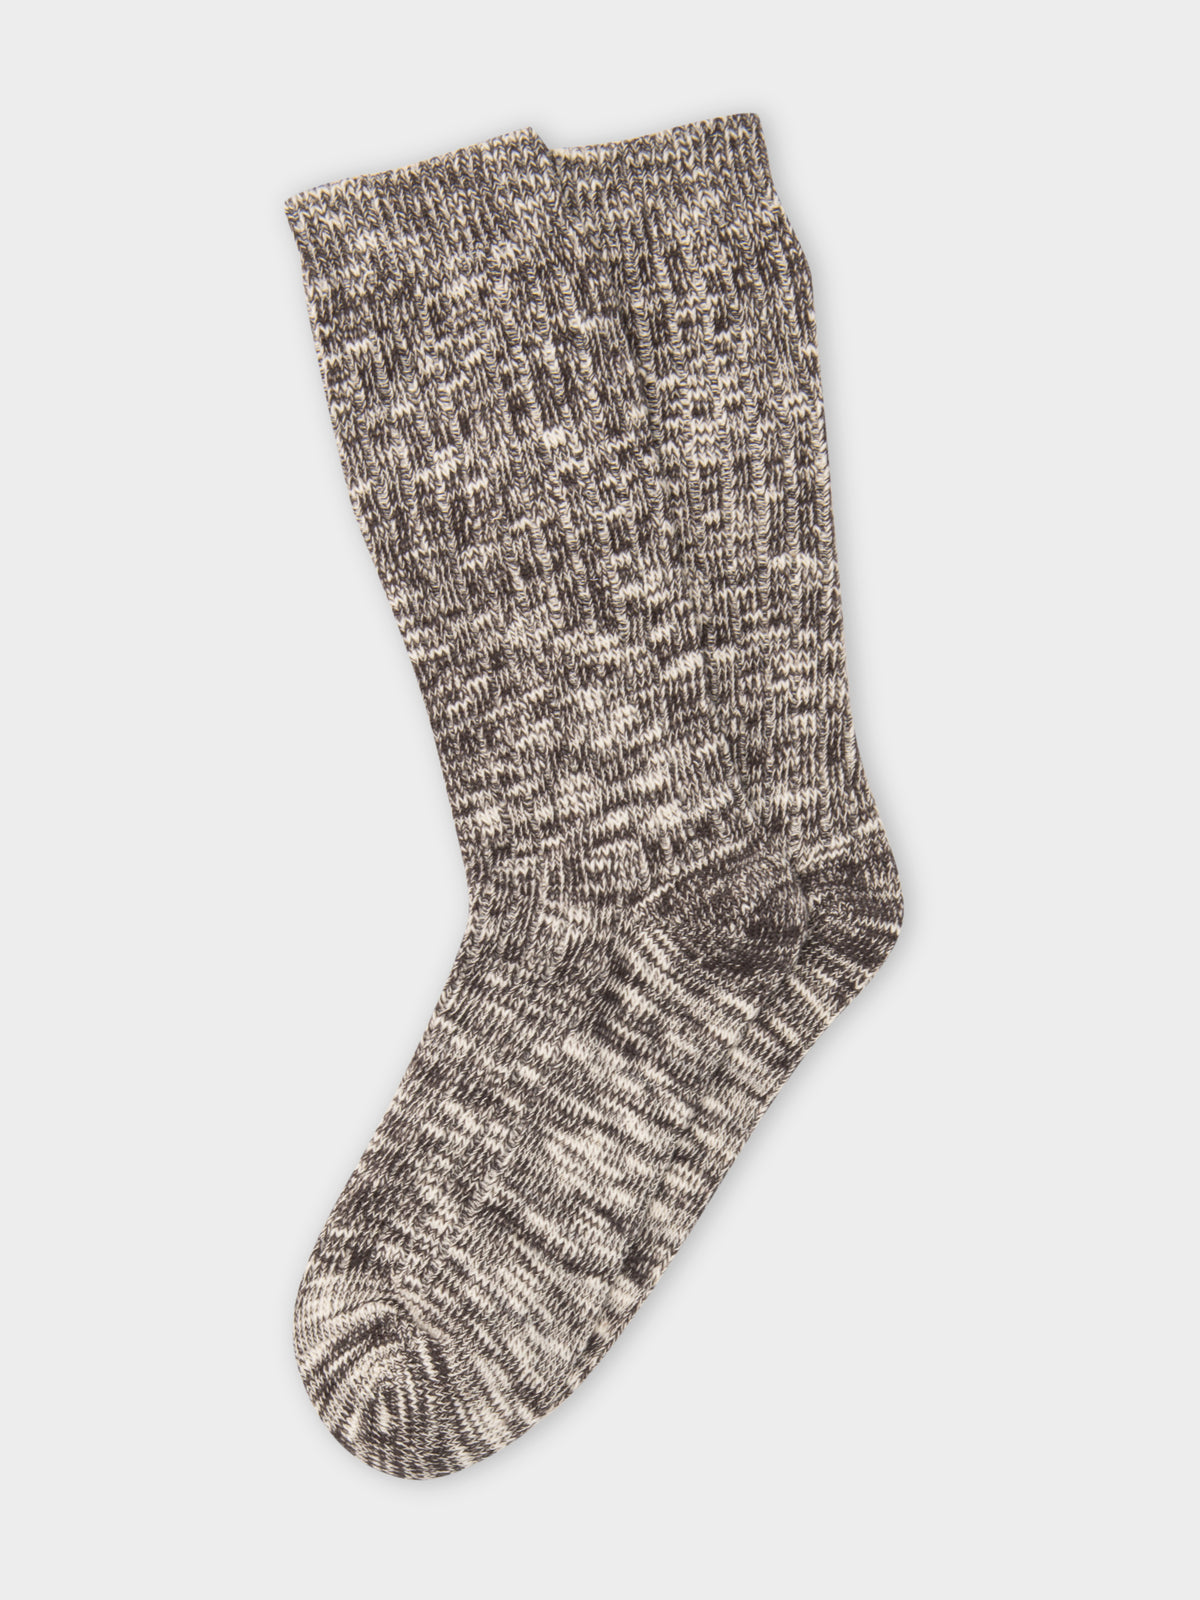 Lounge Knit Socks in Charcoal